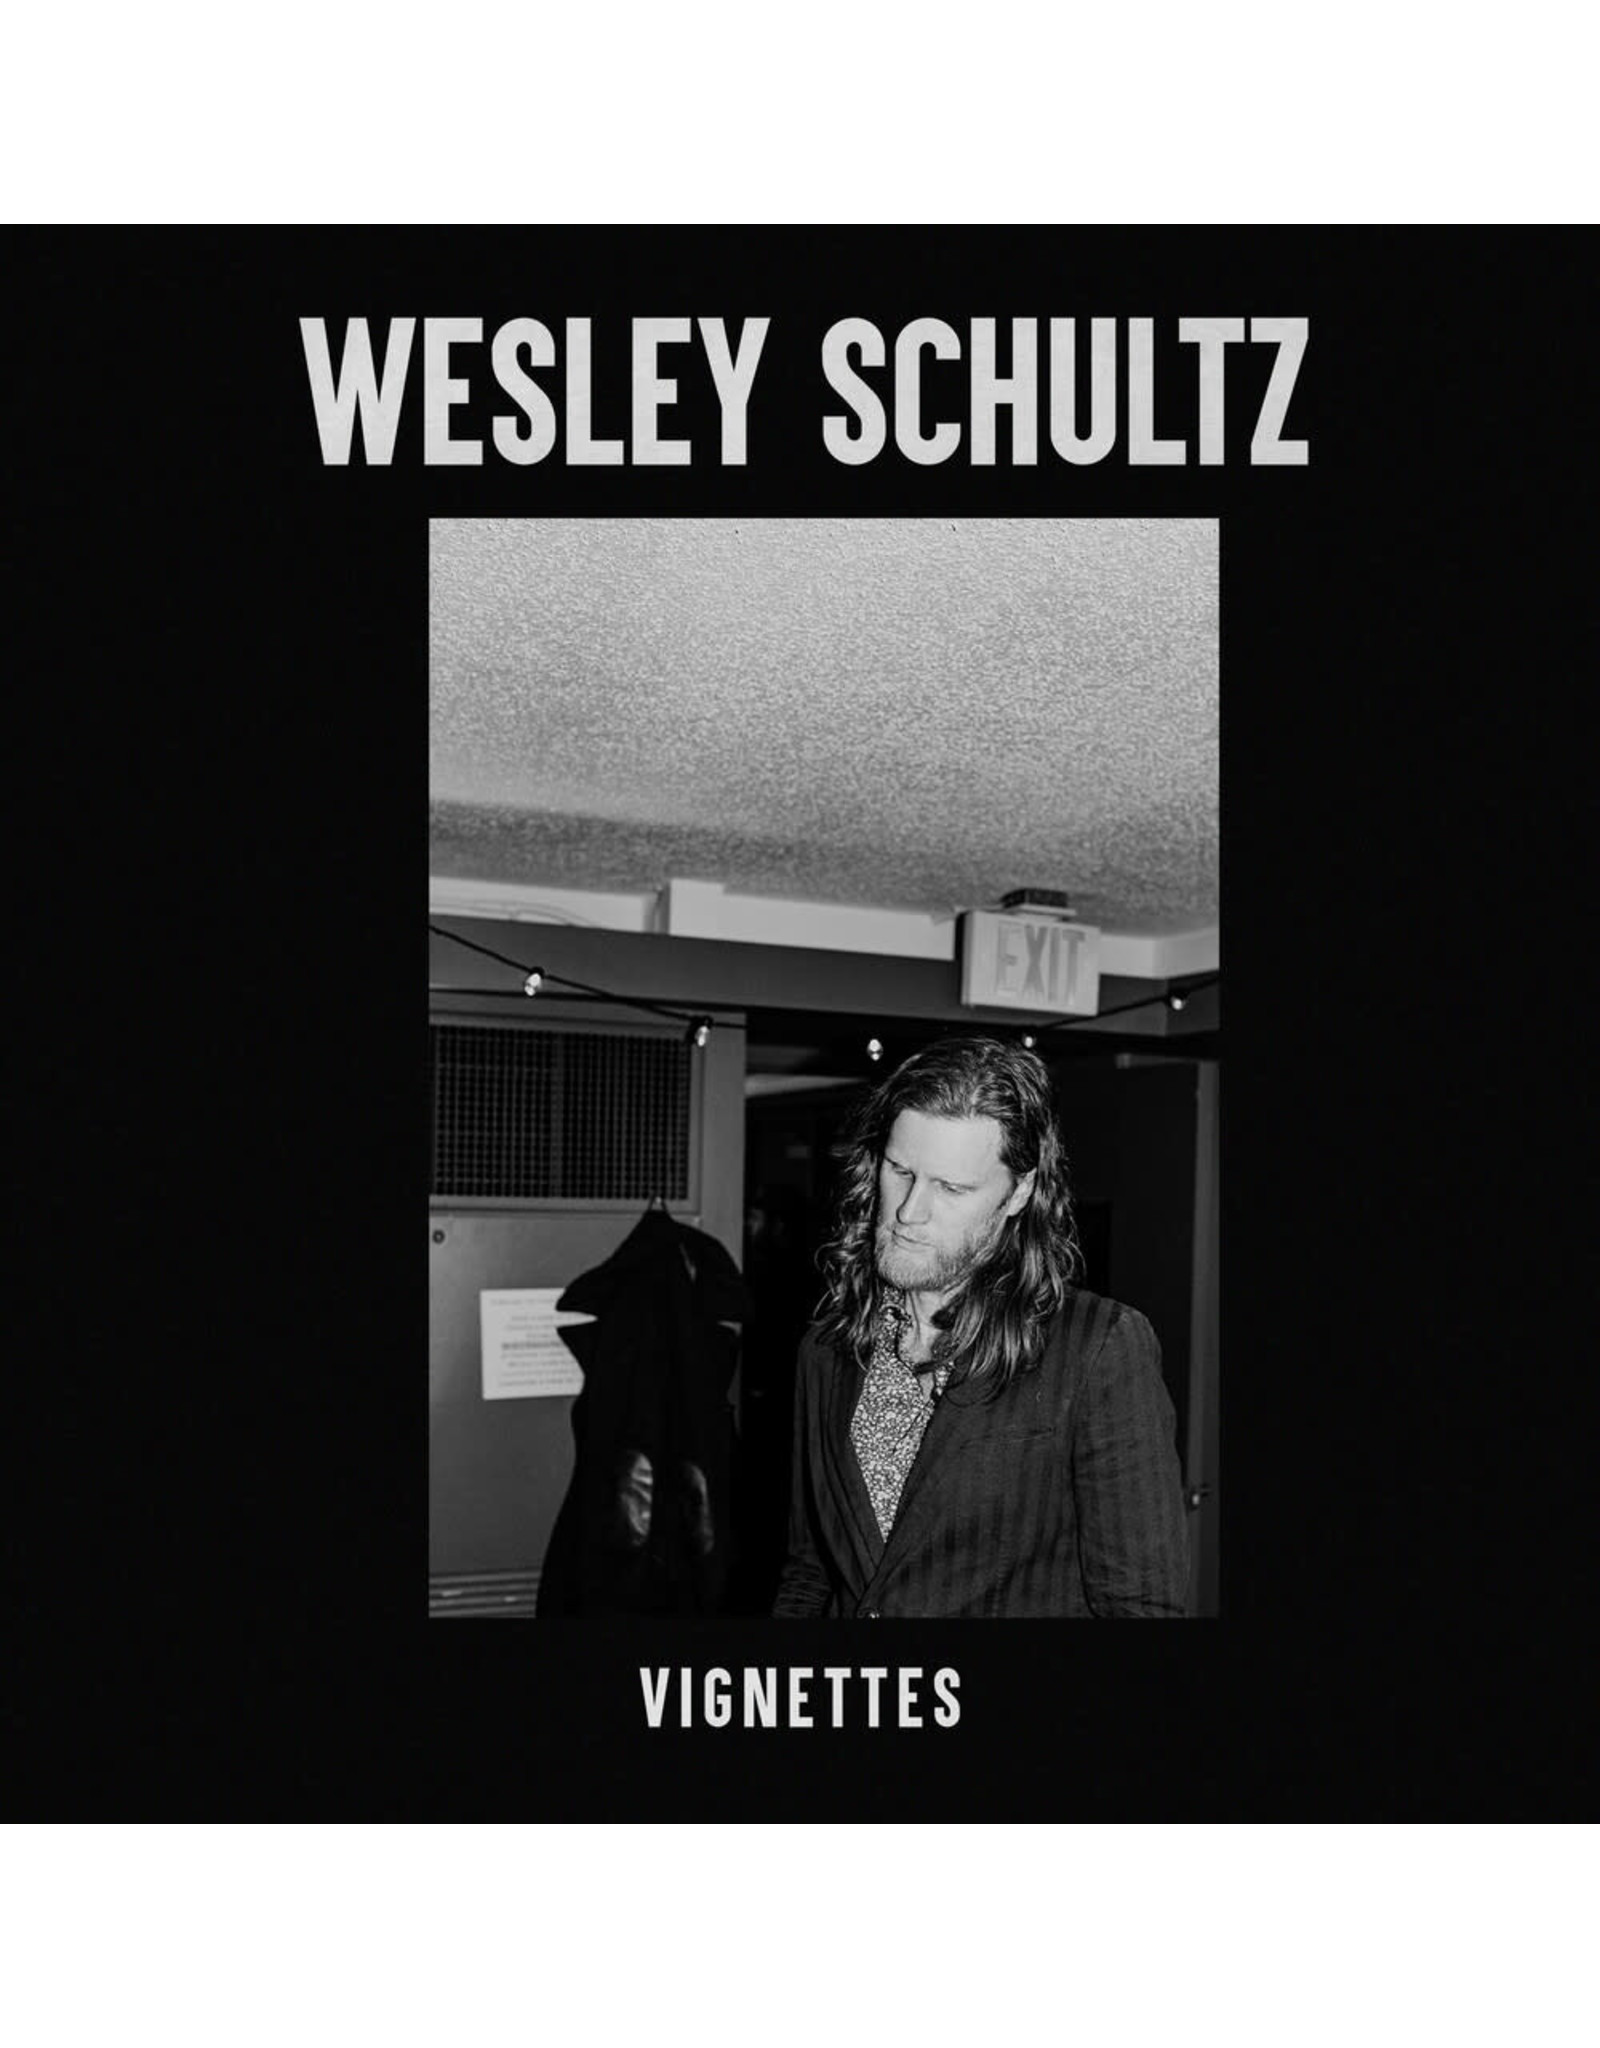 Schultz, Wesley (Lumineers) - Vignettes LP